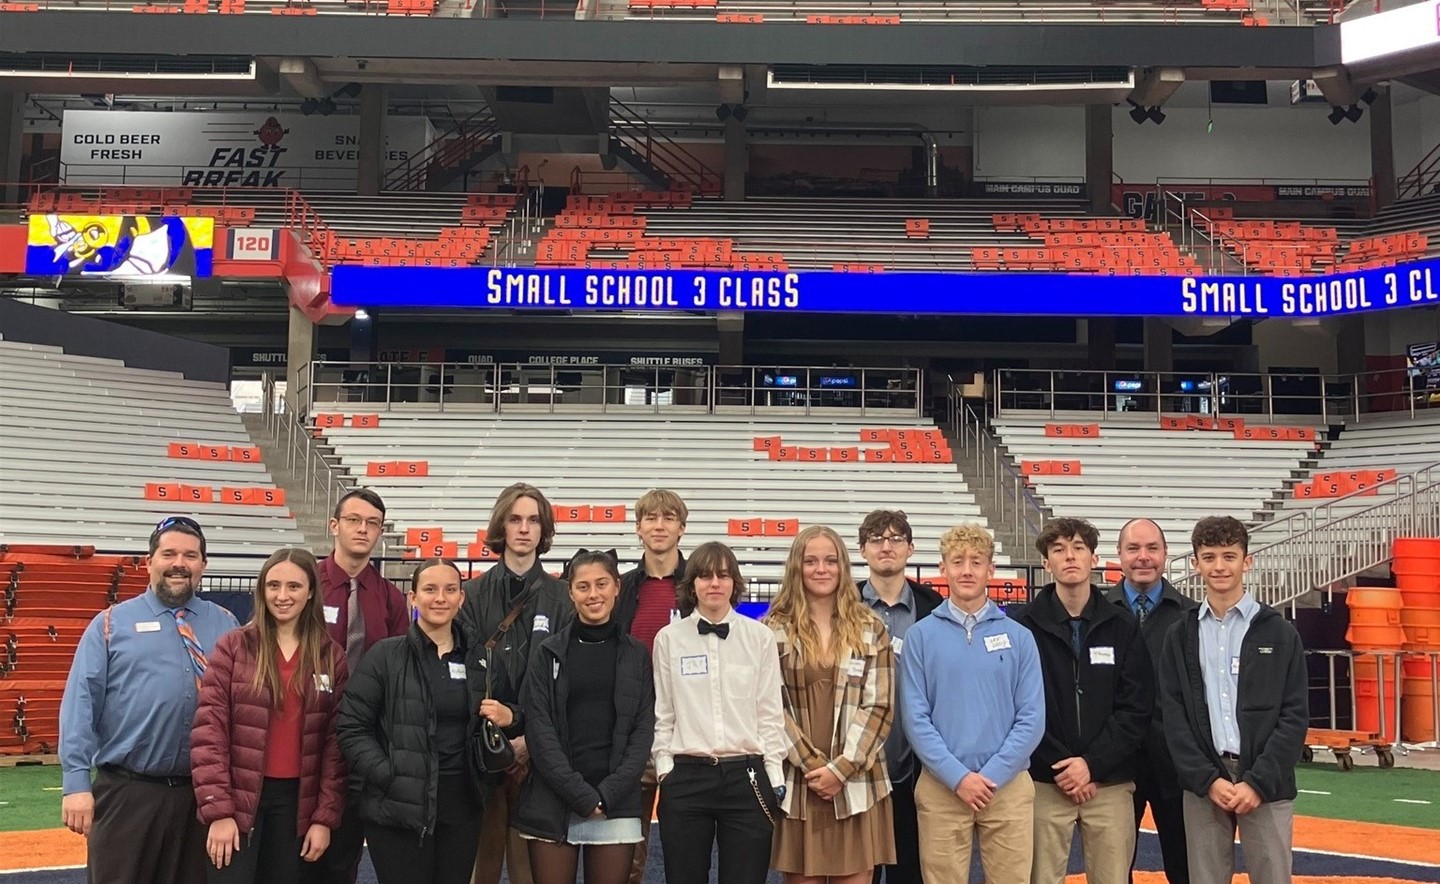 Engineering students visit Syracuse University